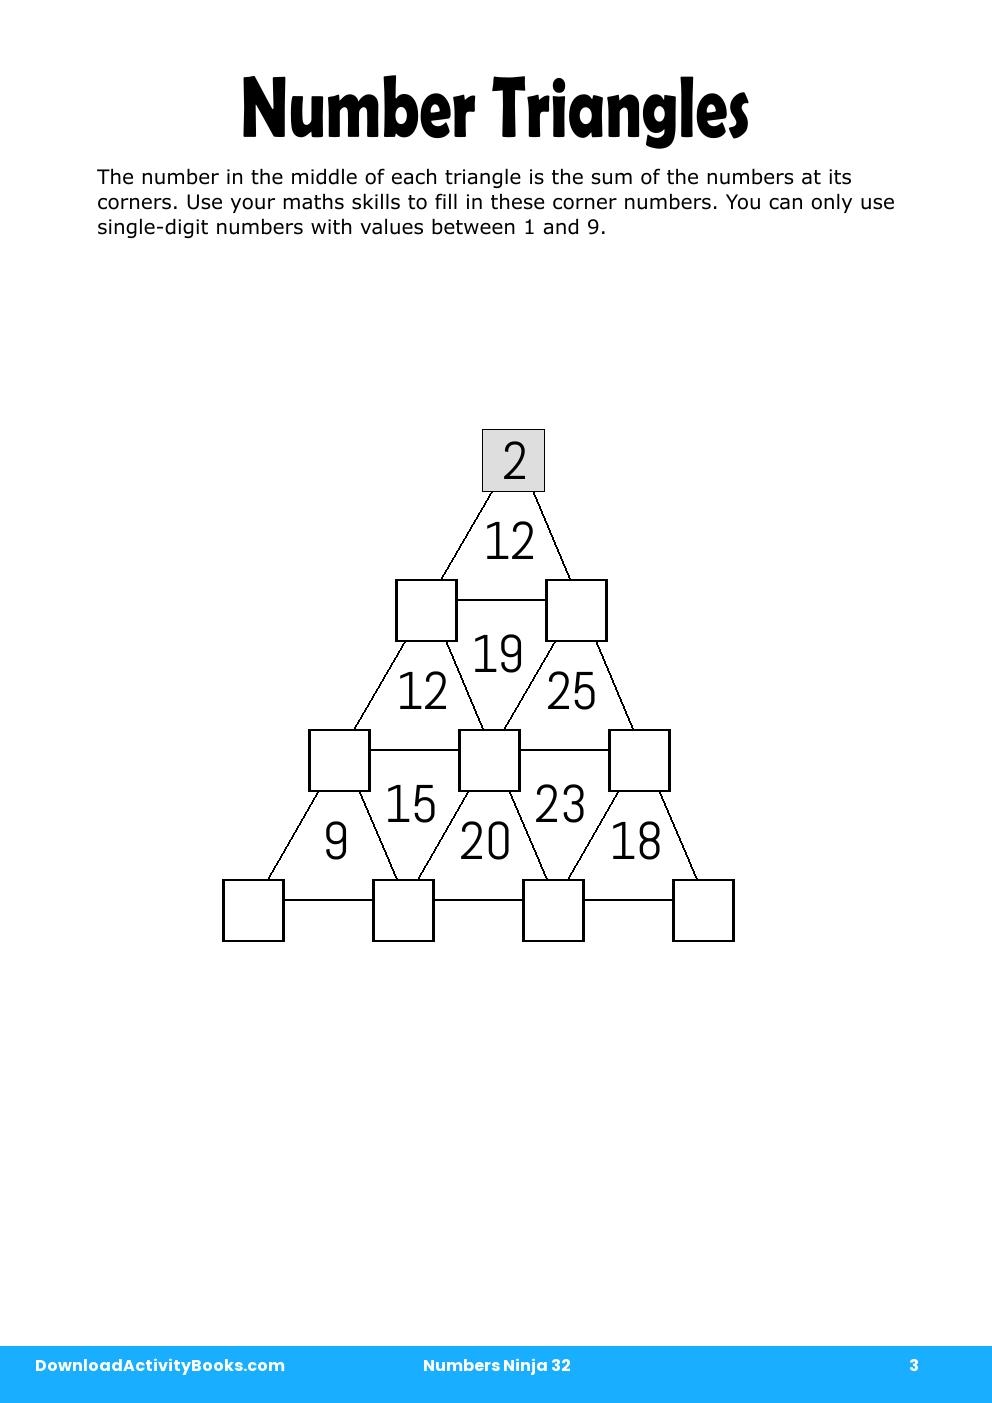 Number Triangles in Numbers Ninja 32